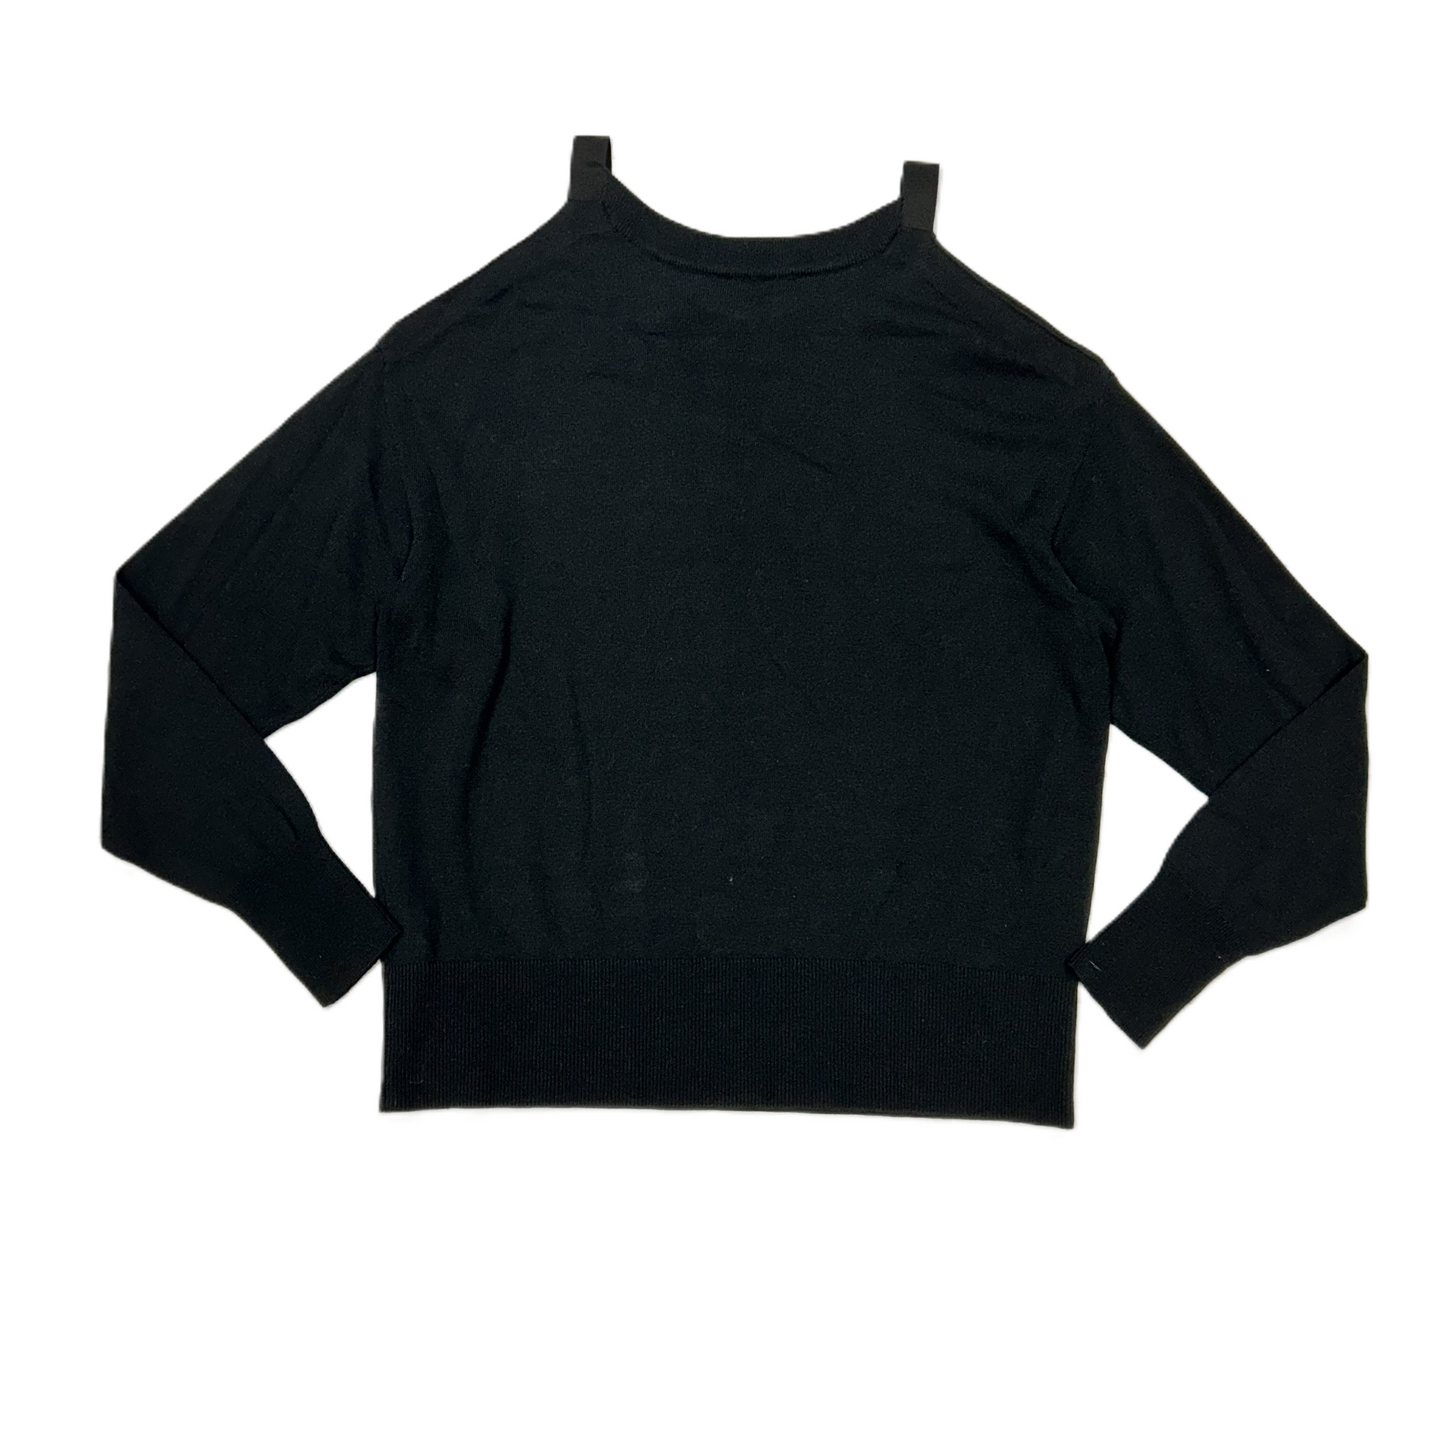 Sweater Designer By J Brand  Size: M